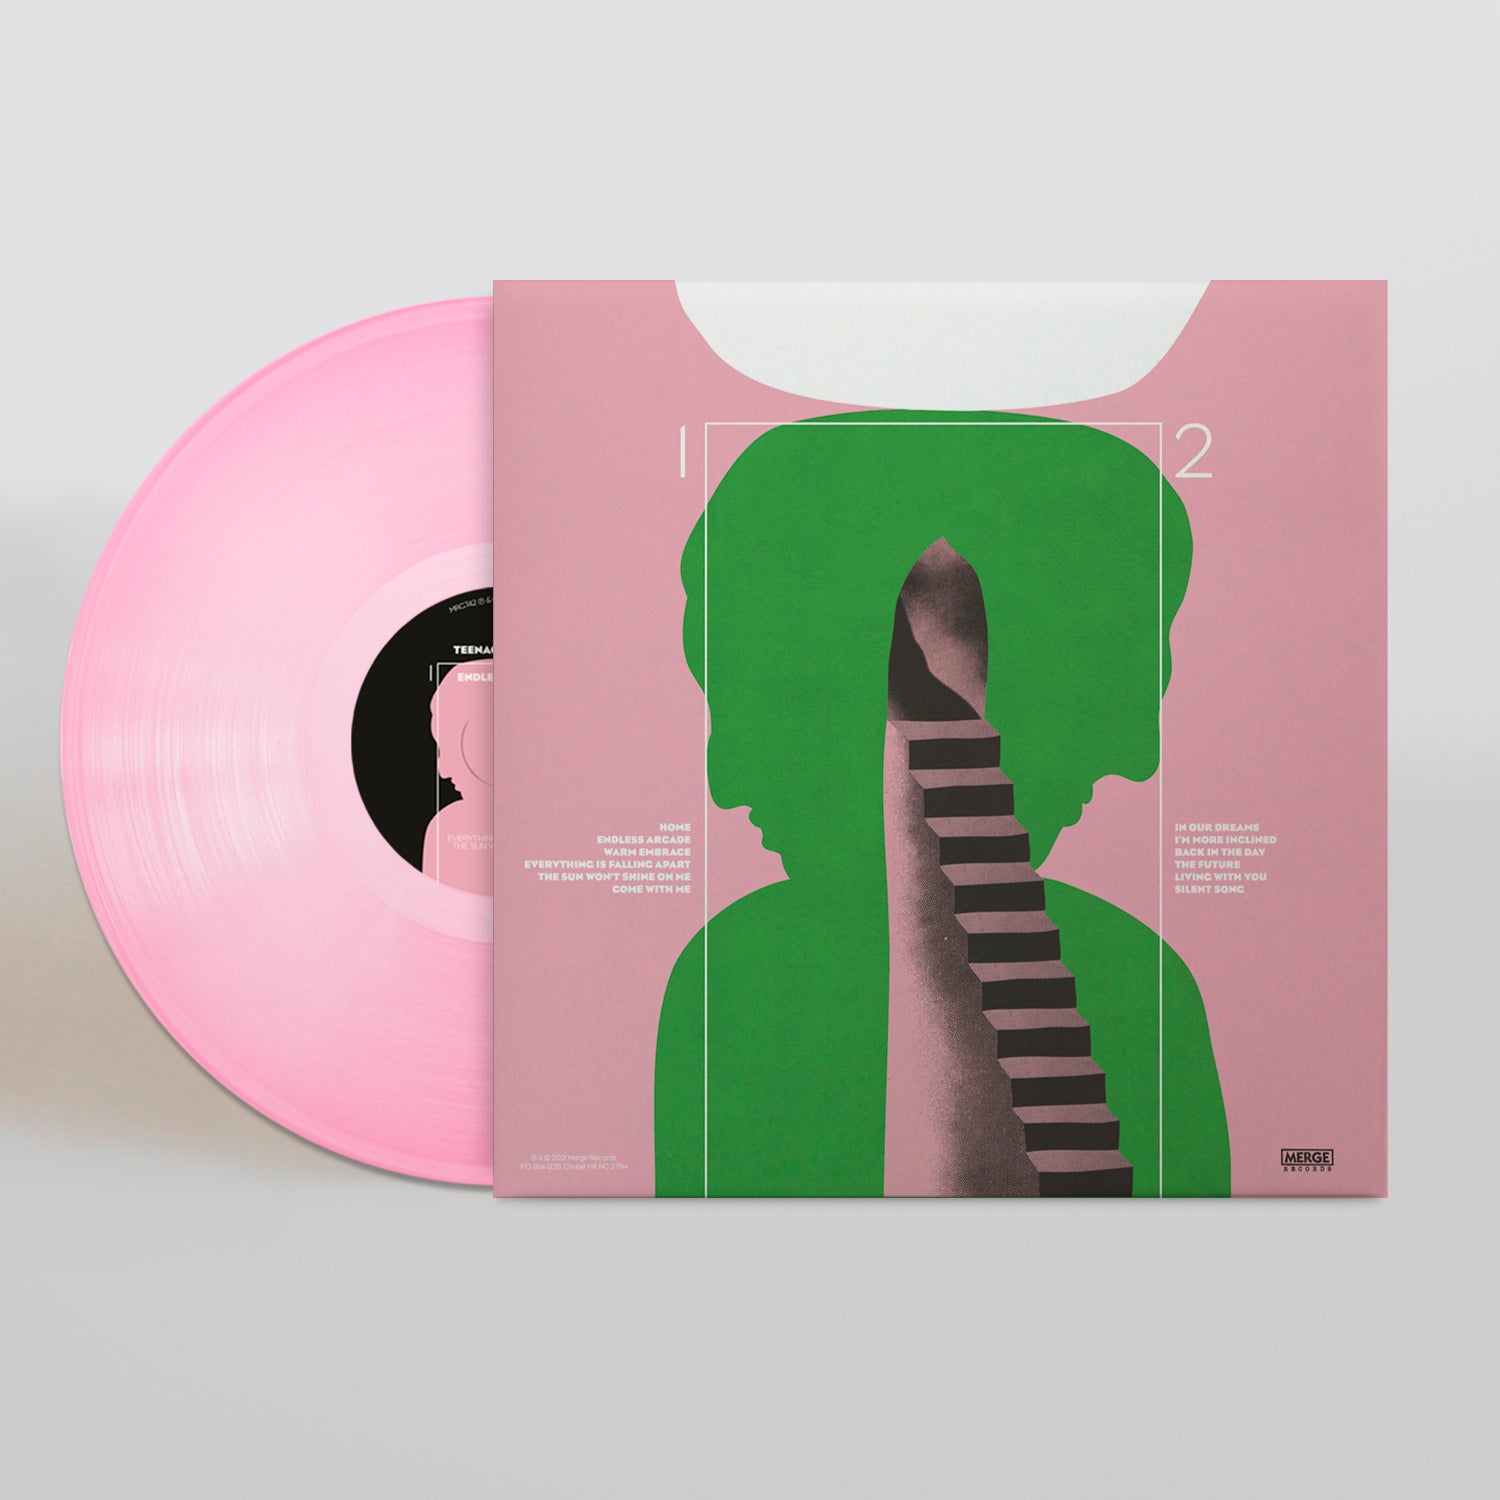 Buy Teenage Fanclub - Endless Arcade (Indie Exclusive, Limited Edition Pink Vinyl)